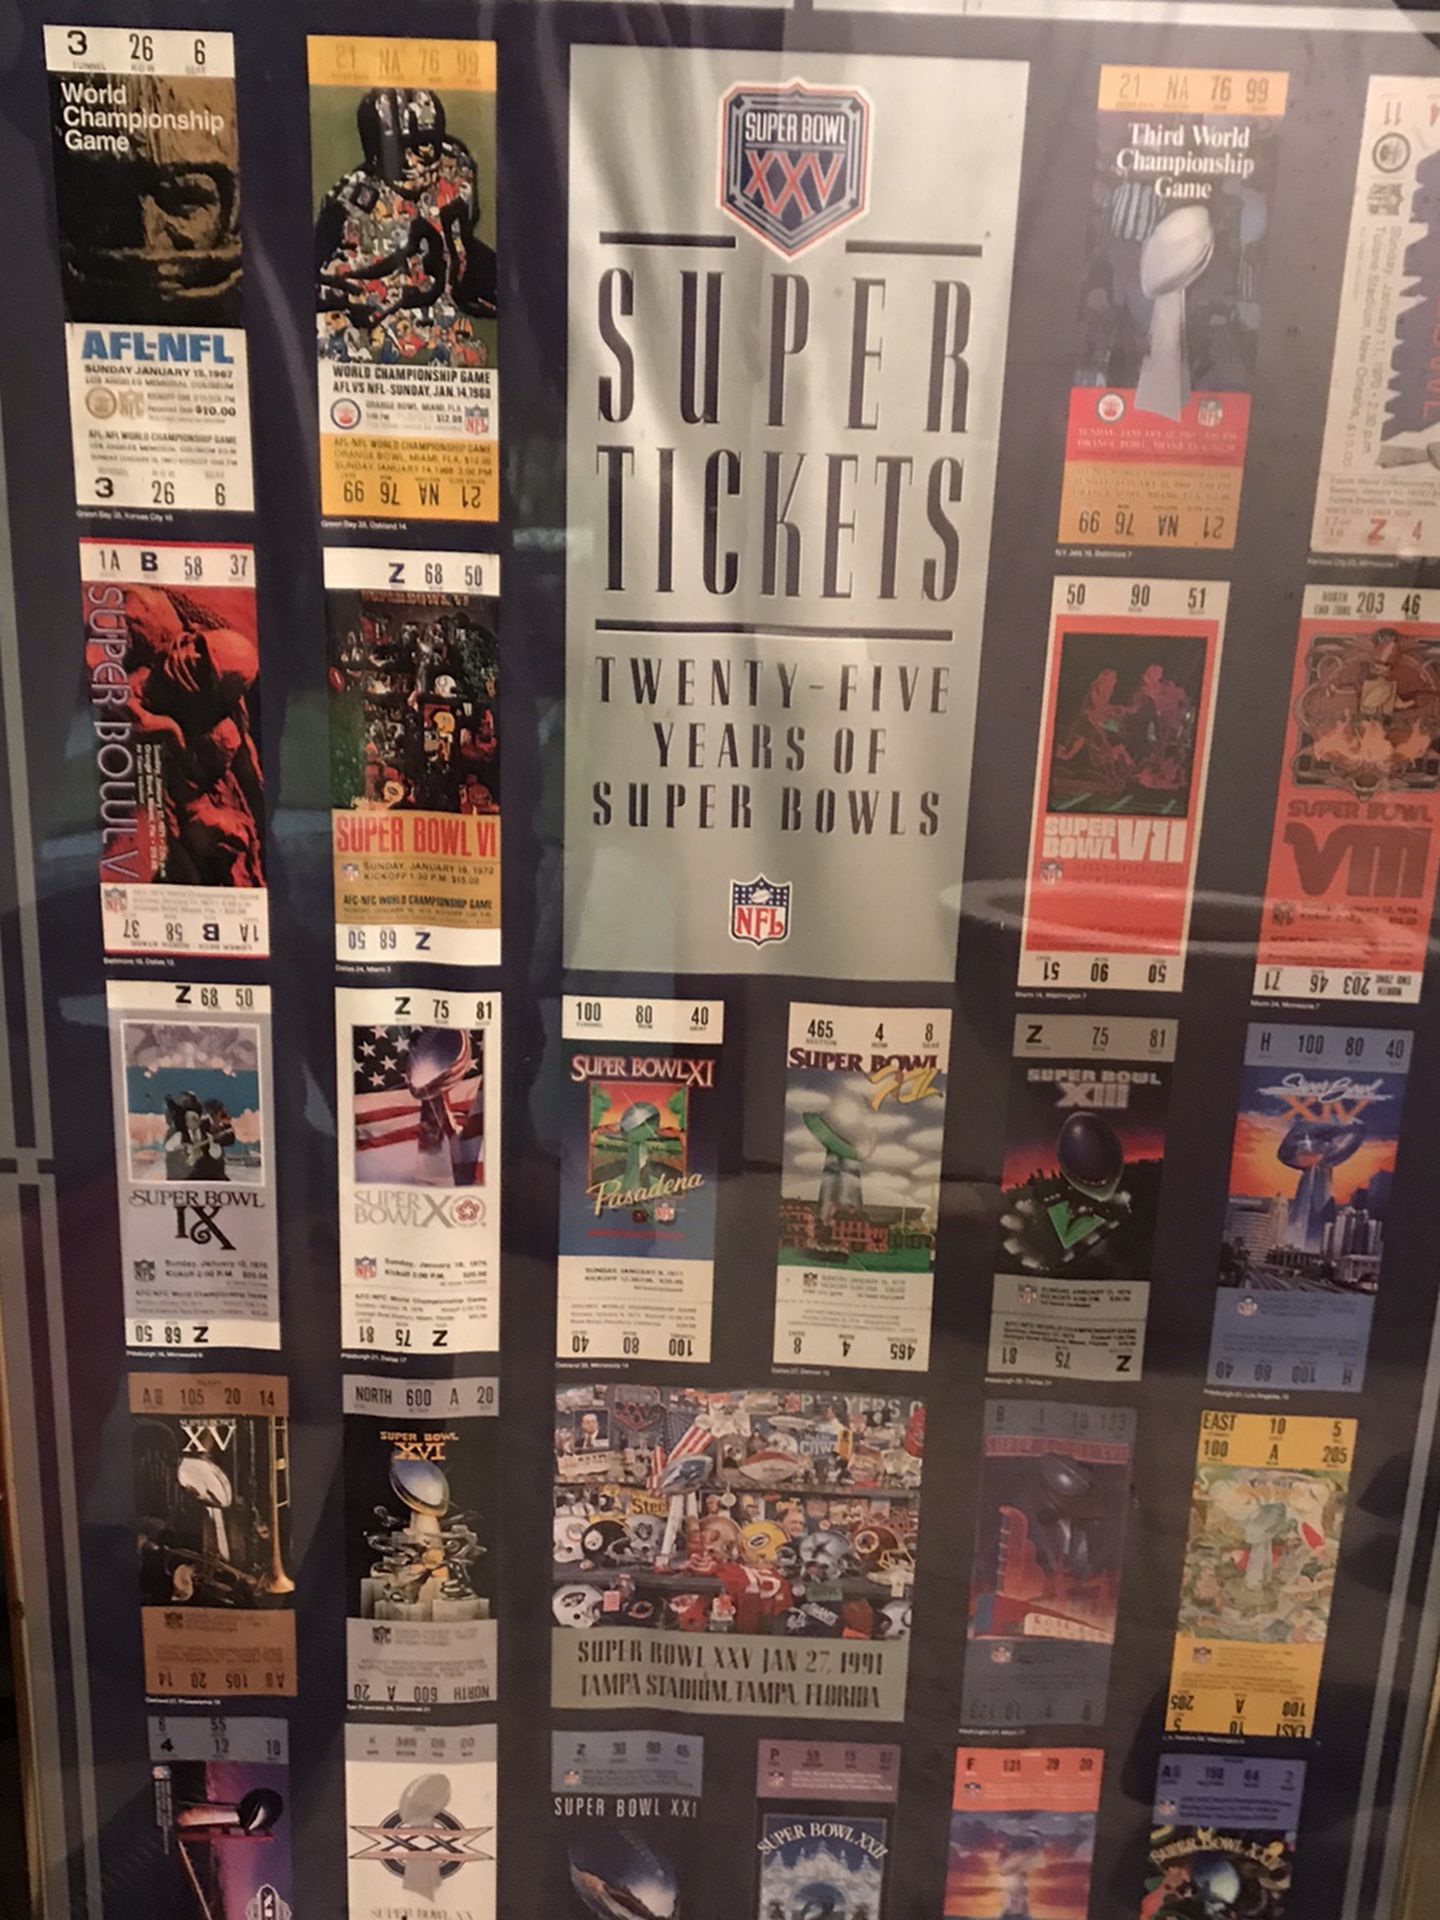 Super Bowl Ticket Poster